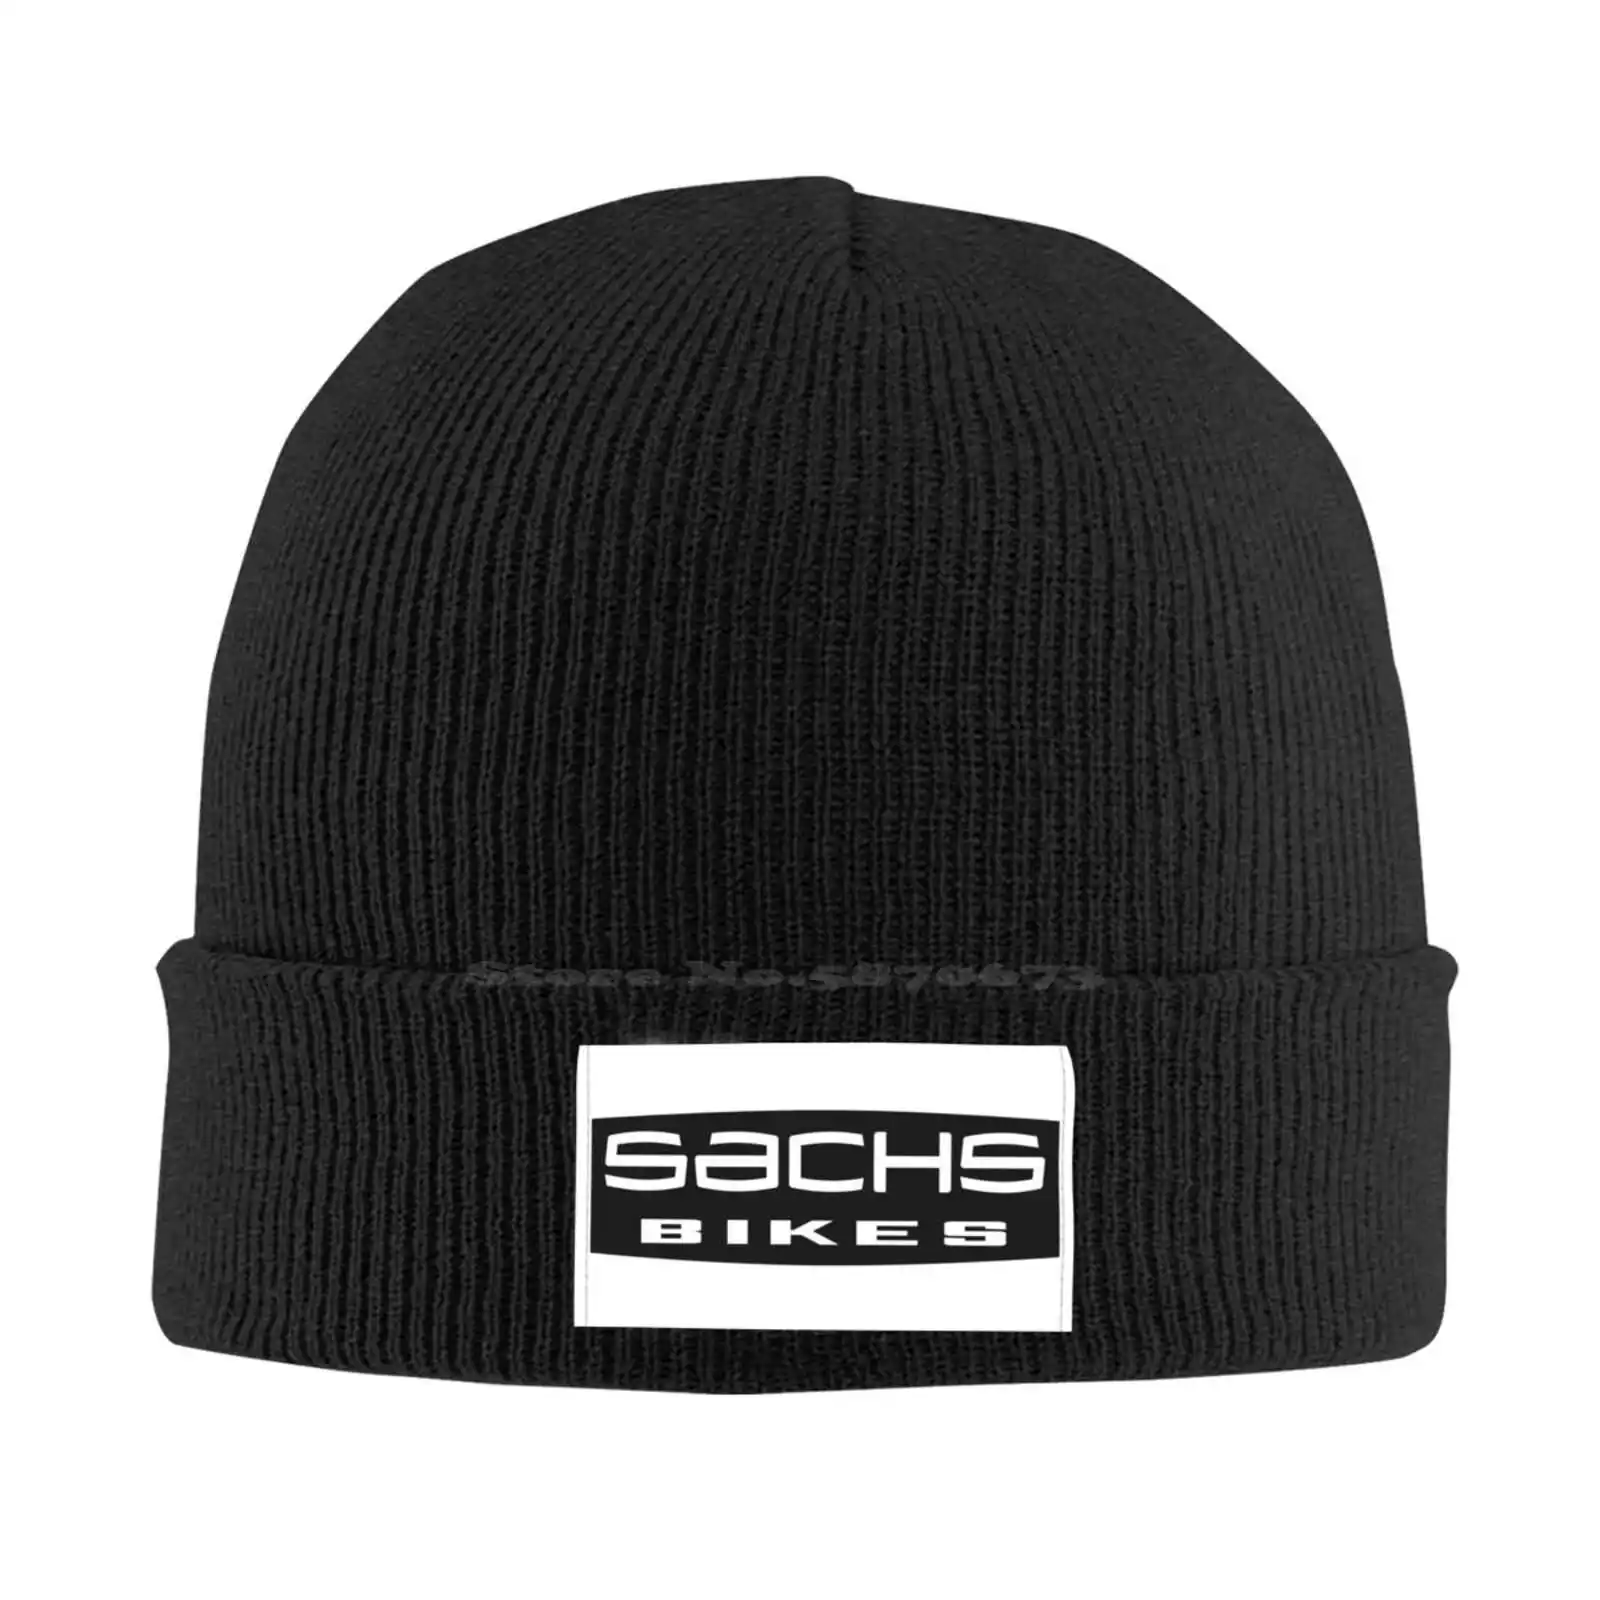 

Sachs Bikes Logo Fashion cap quality Baseball cap Knitted hat